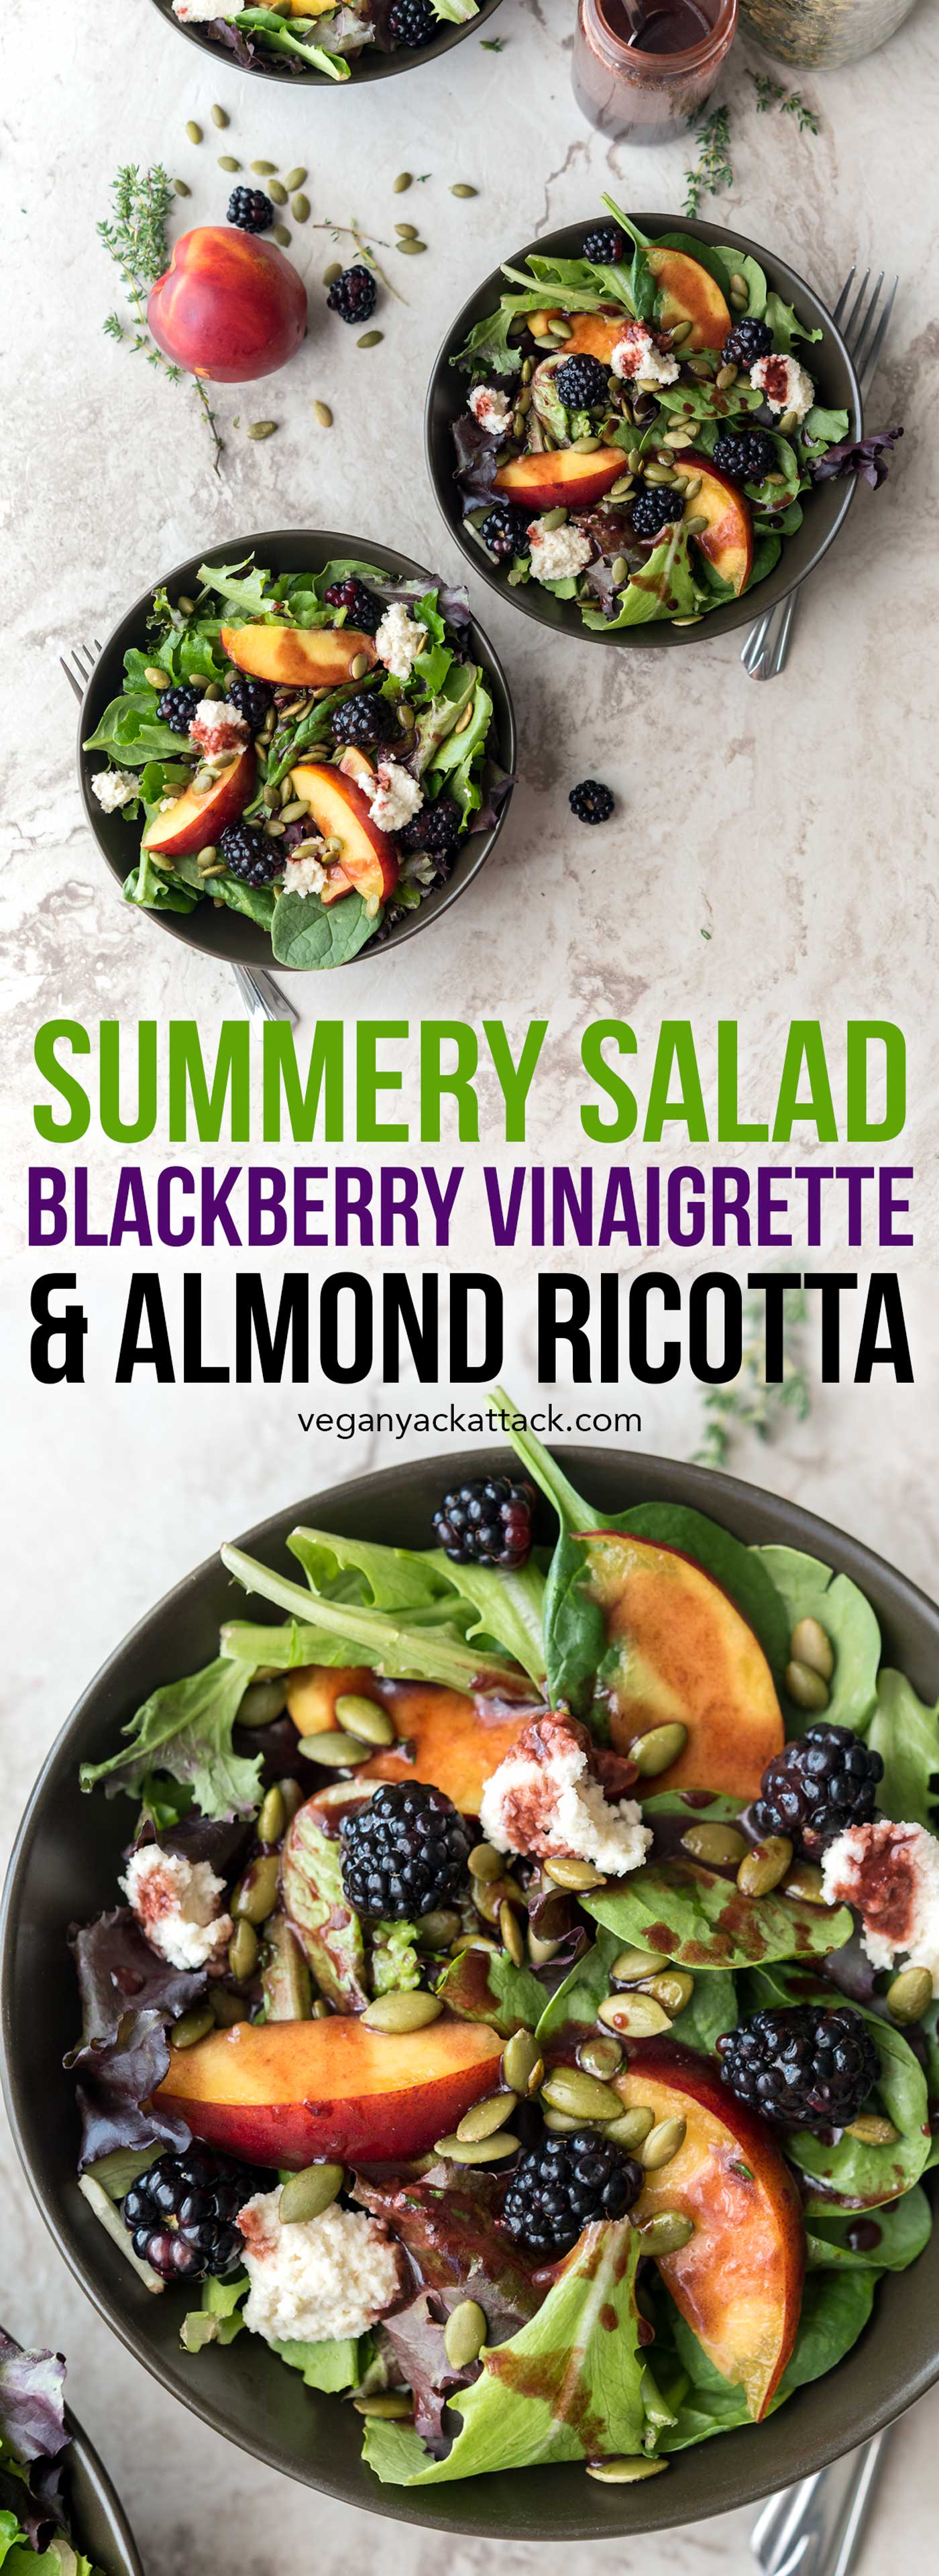 This Summery Salad has delicious nectarines, berries, homemade almond ricotta and a wonderful Blackberry Vinaigrette! It’s as beautiful as it is tasty. #vegan #glutenfree #soyfree #veganyackattack